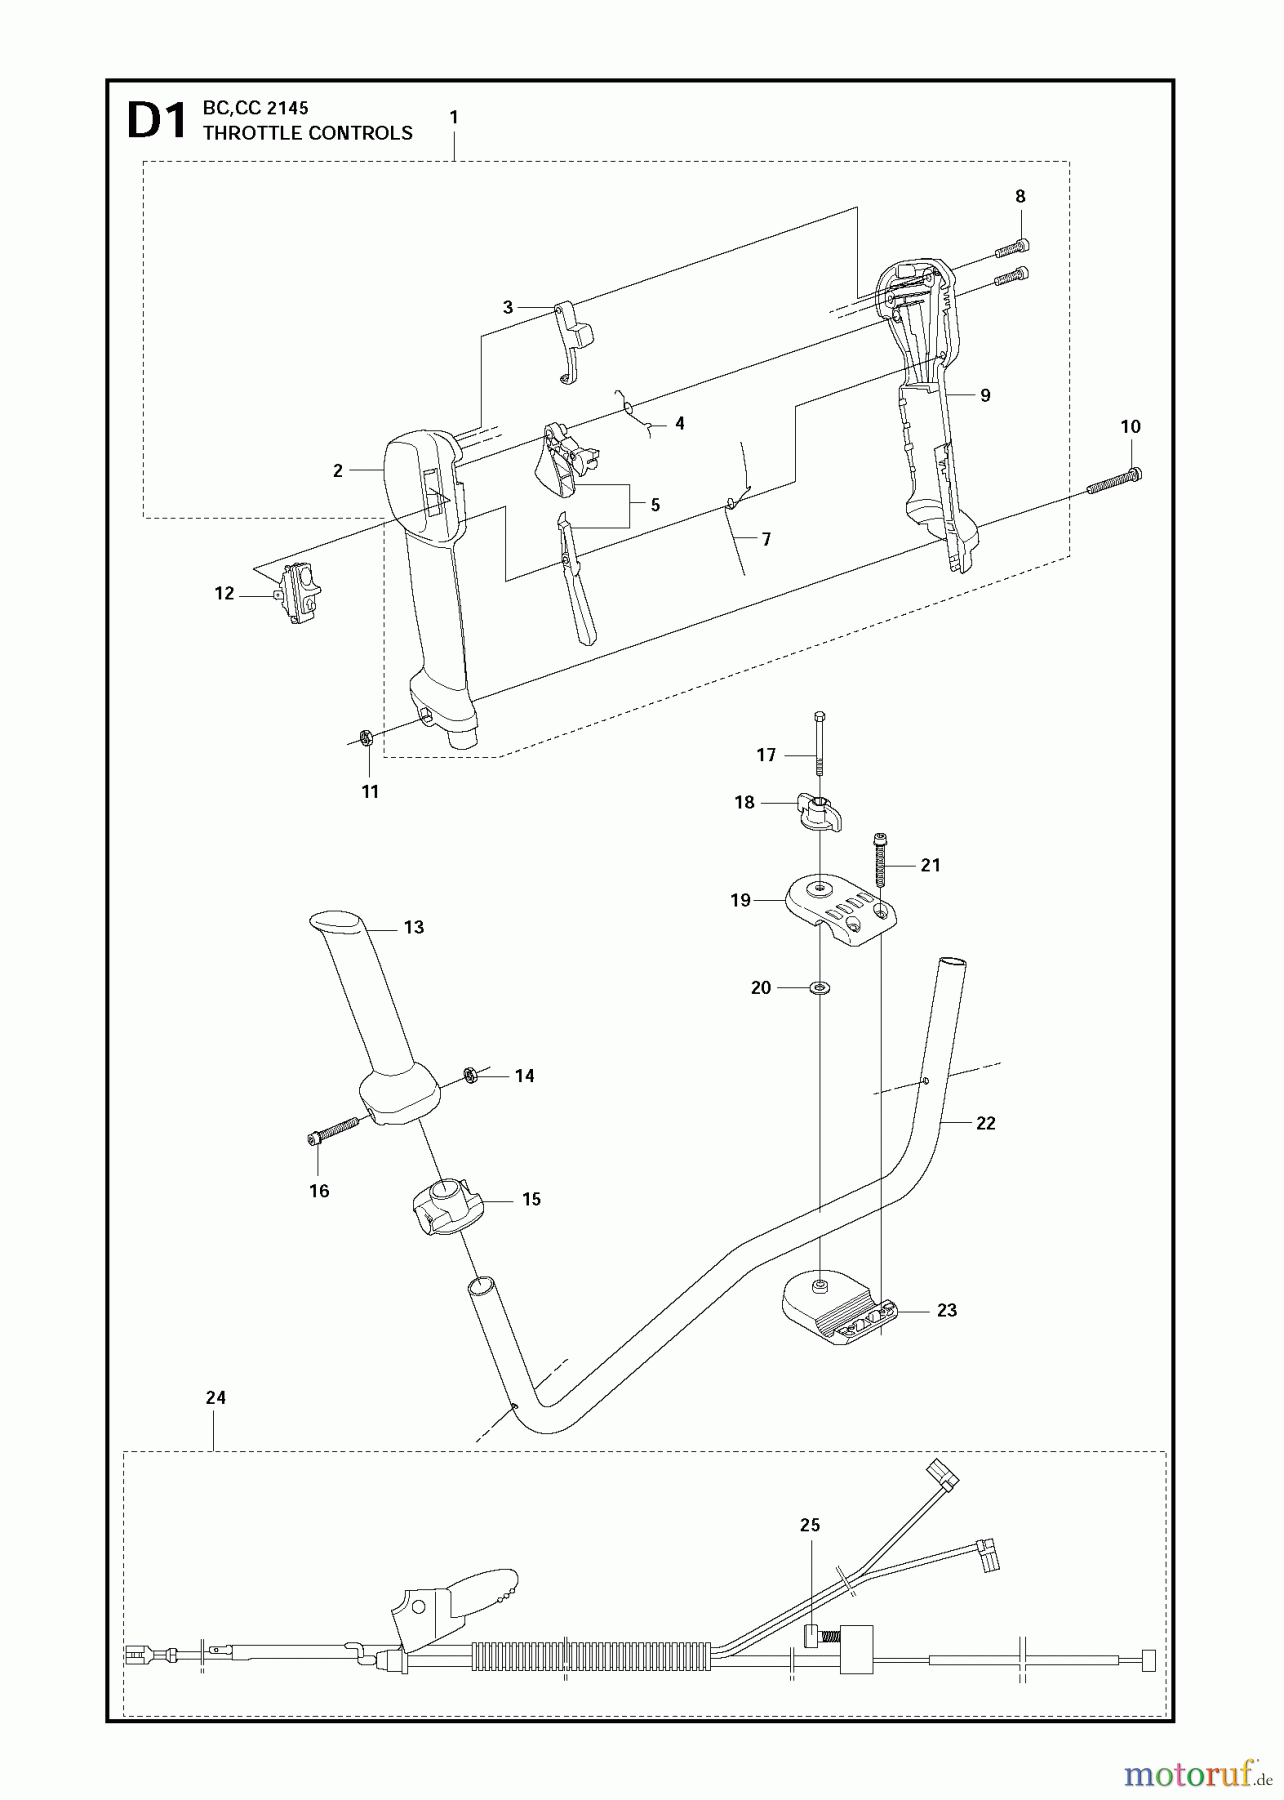  Jonsered Motorsensen, Trimmer BC2145 - Jonsered Brushcutter (2011-02) THROTTLE CONTROLS